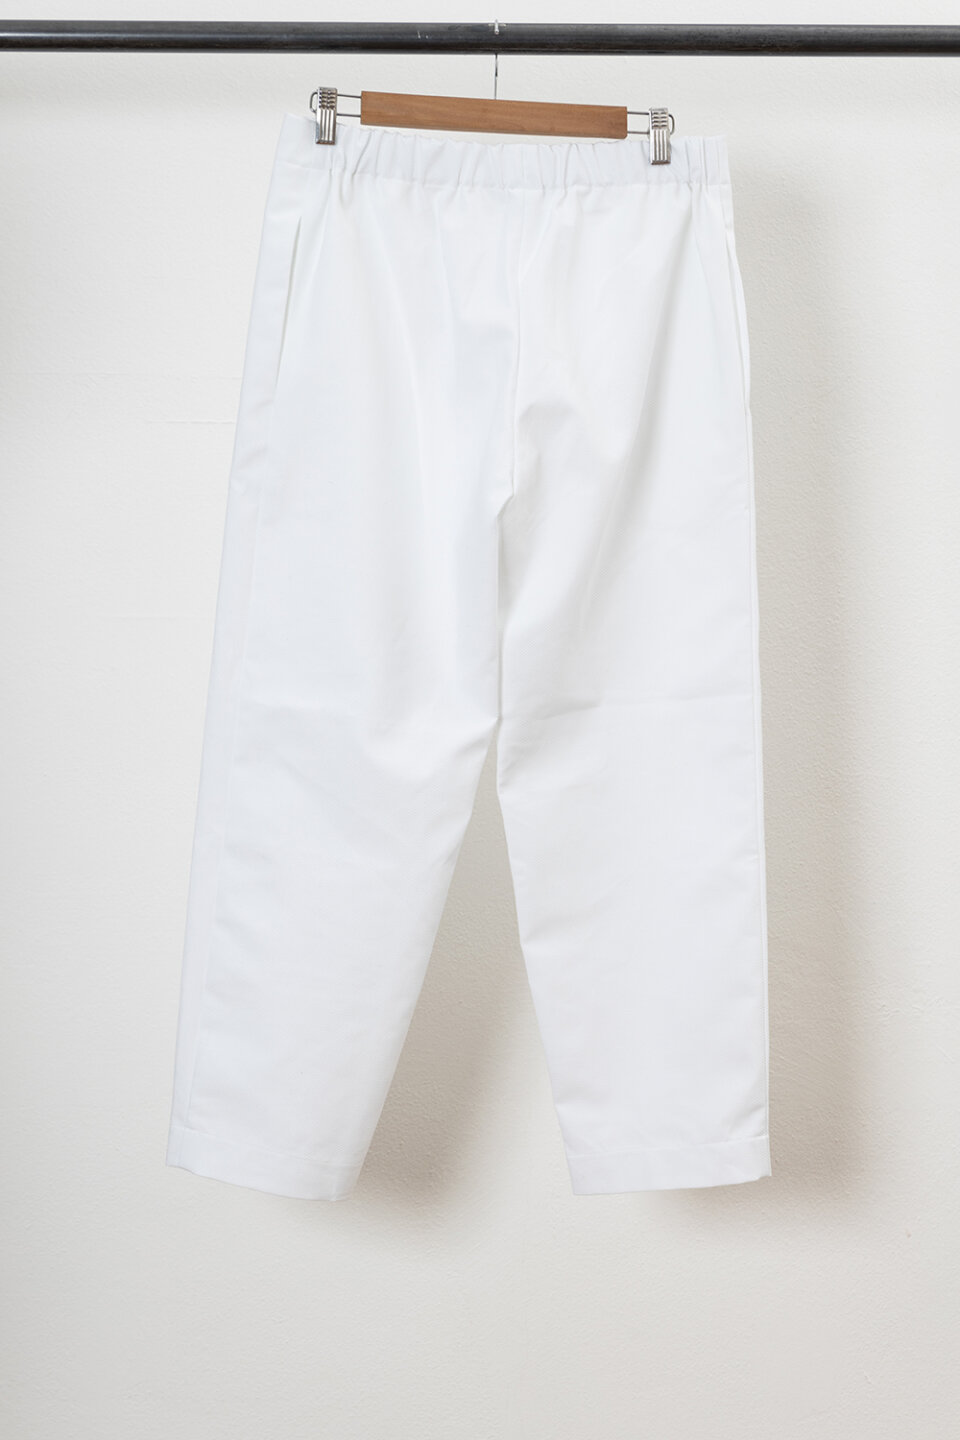 Pantalone Boy bianco 2 1 - Officinae